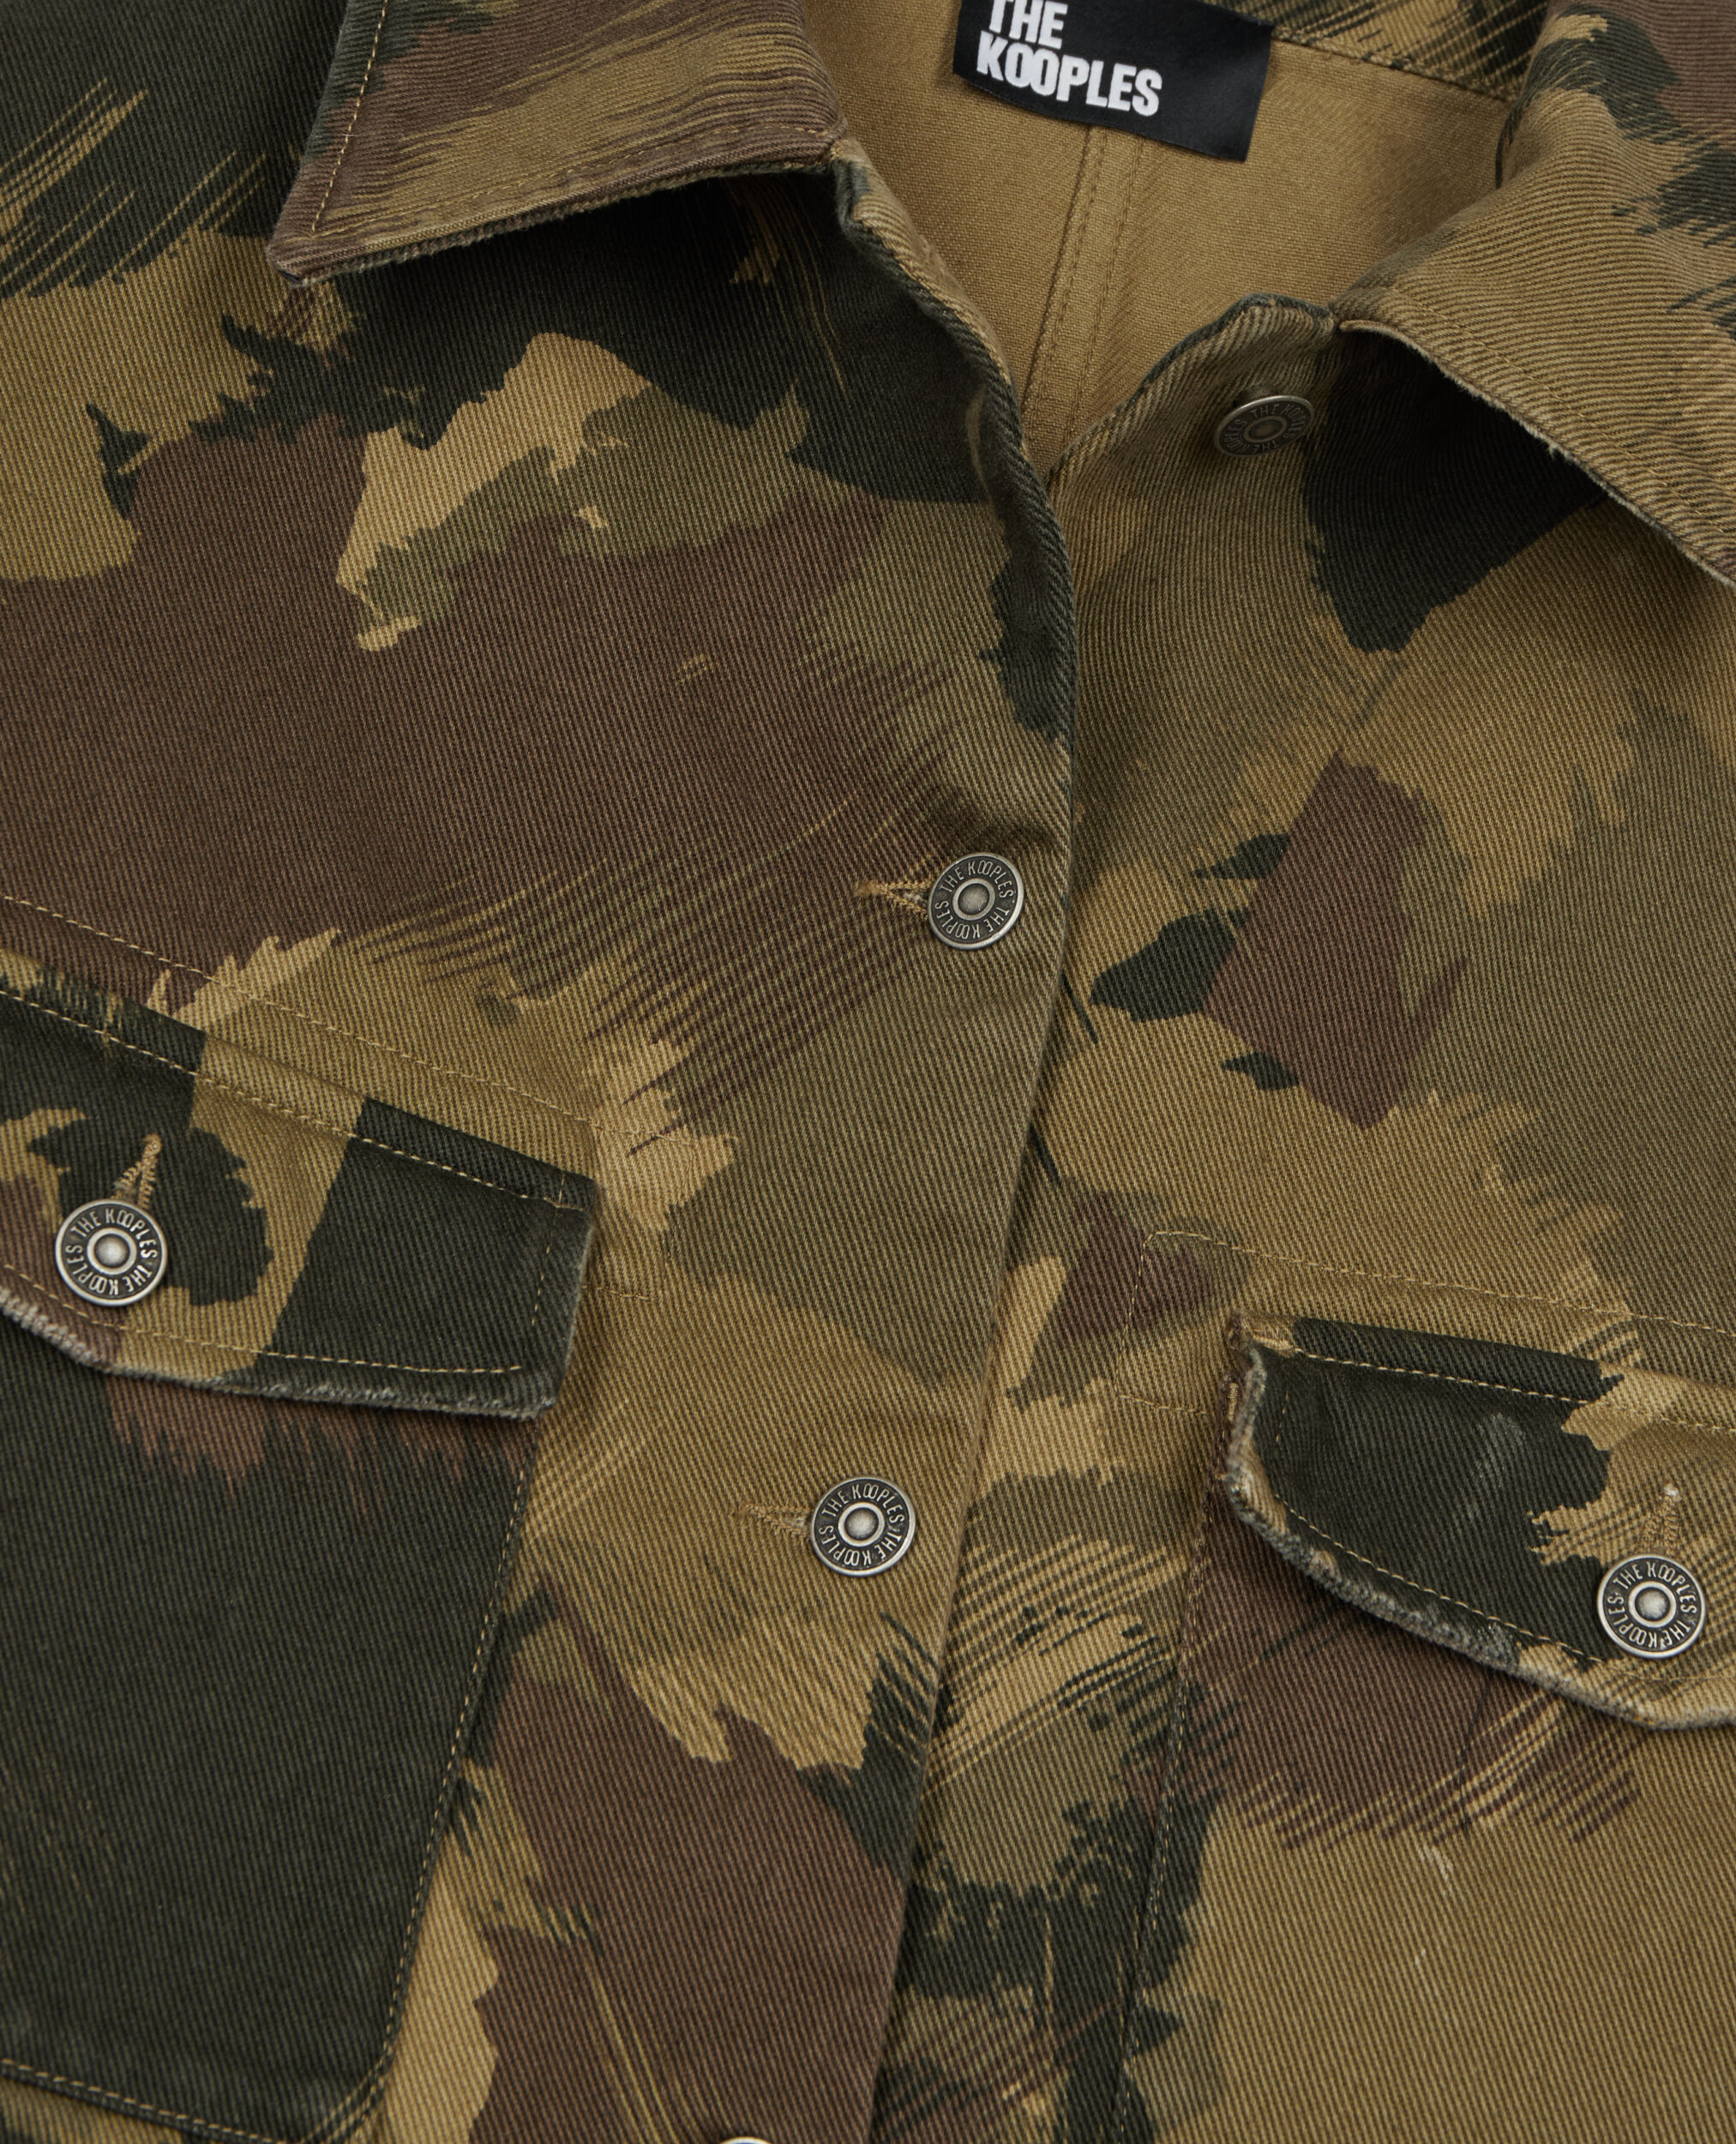 Kurzer Camouflage-Blouson aus Denim, CAMOUFLAGE, hi-res image number null